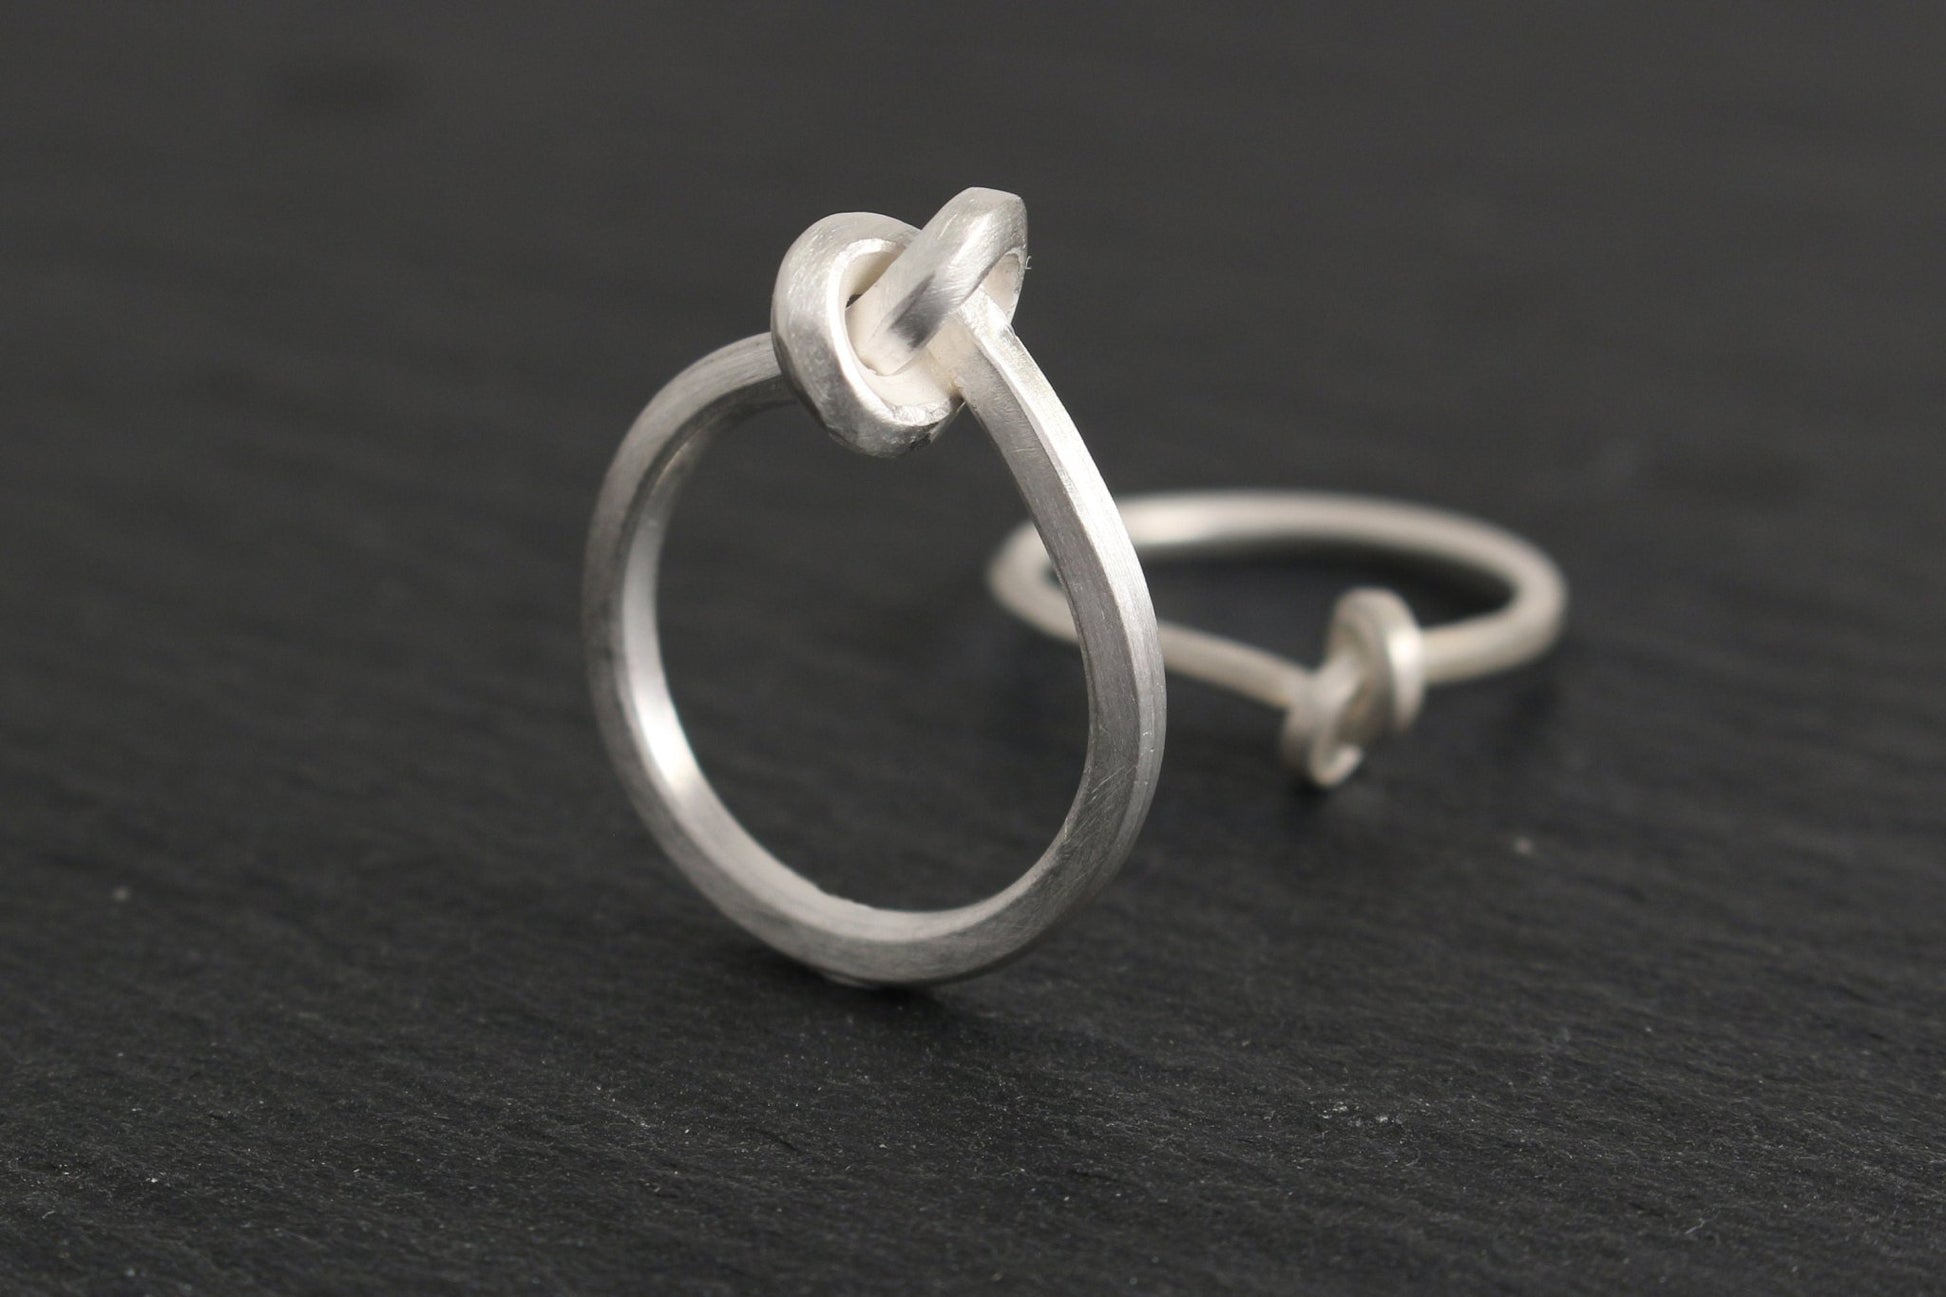 Silber Knotenring (950) | Verlobungsring | Antragsring | infinity, design, schlicht - Goldschmiede Miret